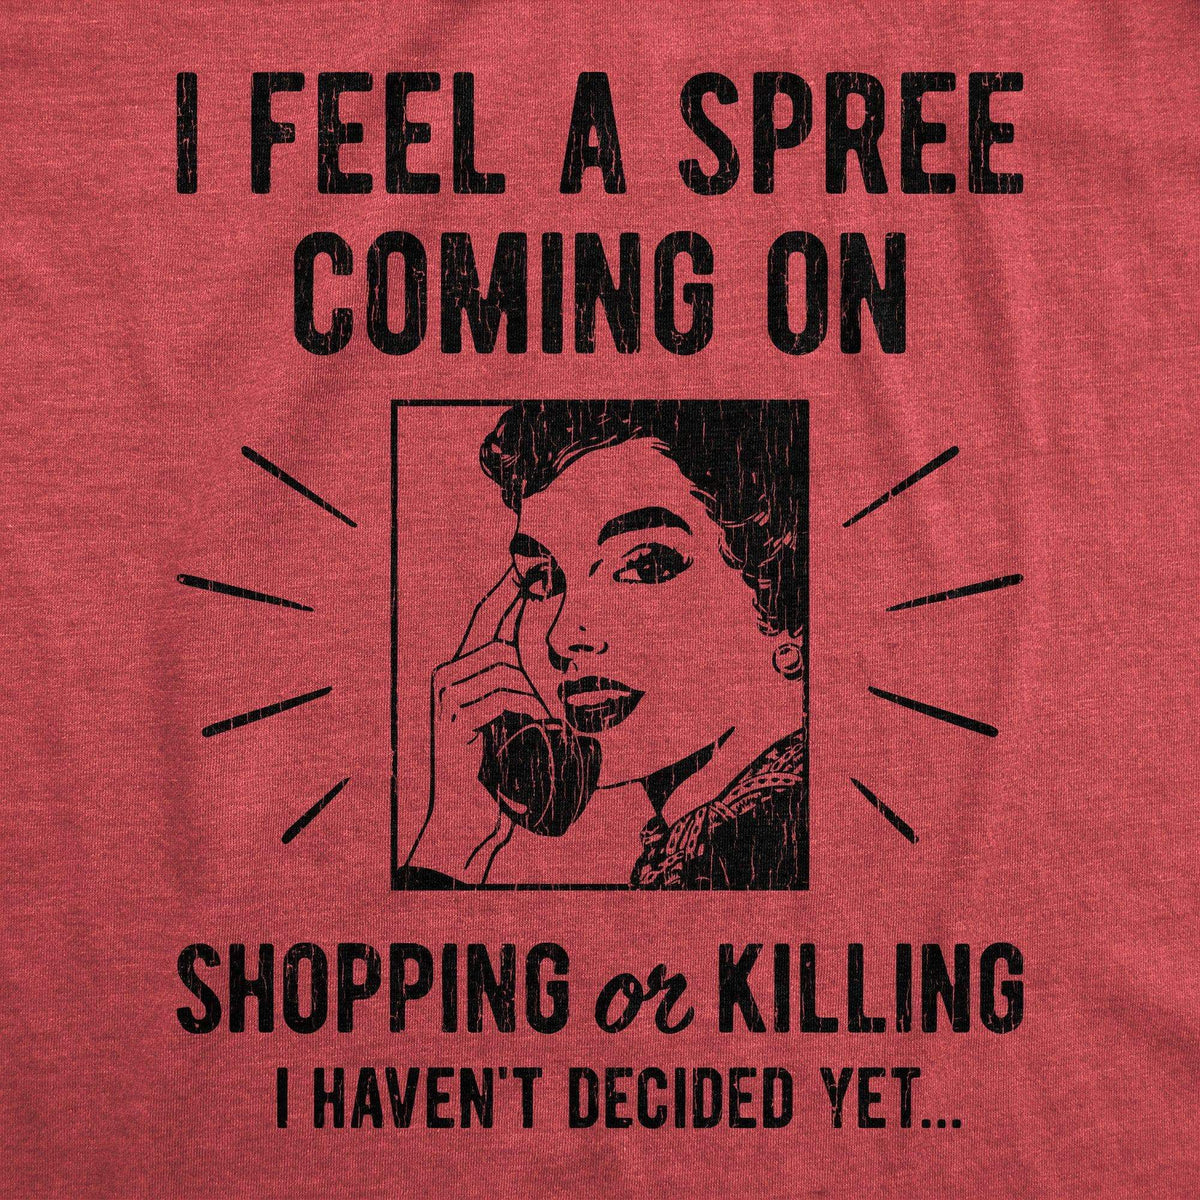 I Feel A Spree Coming On Women&#39;s Tshirt - Crazy Dog T-Shirts